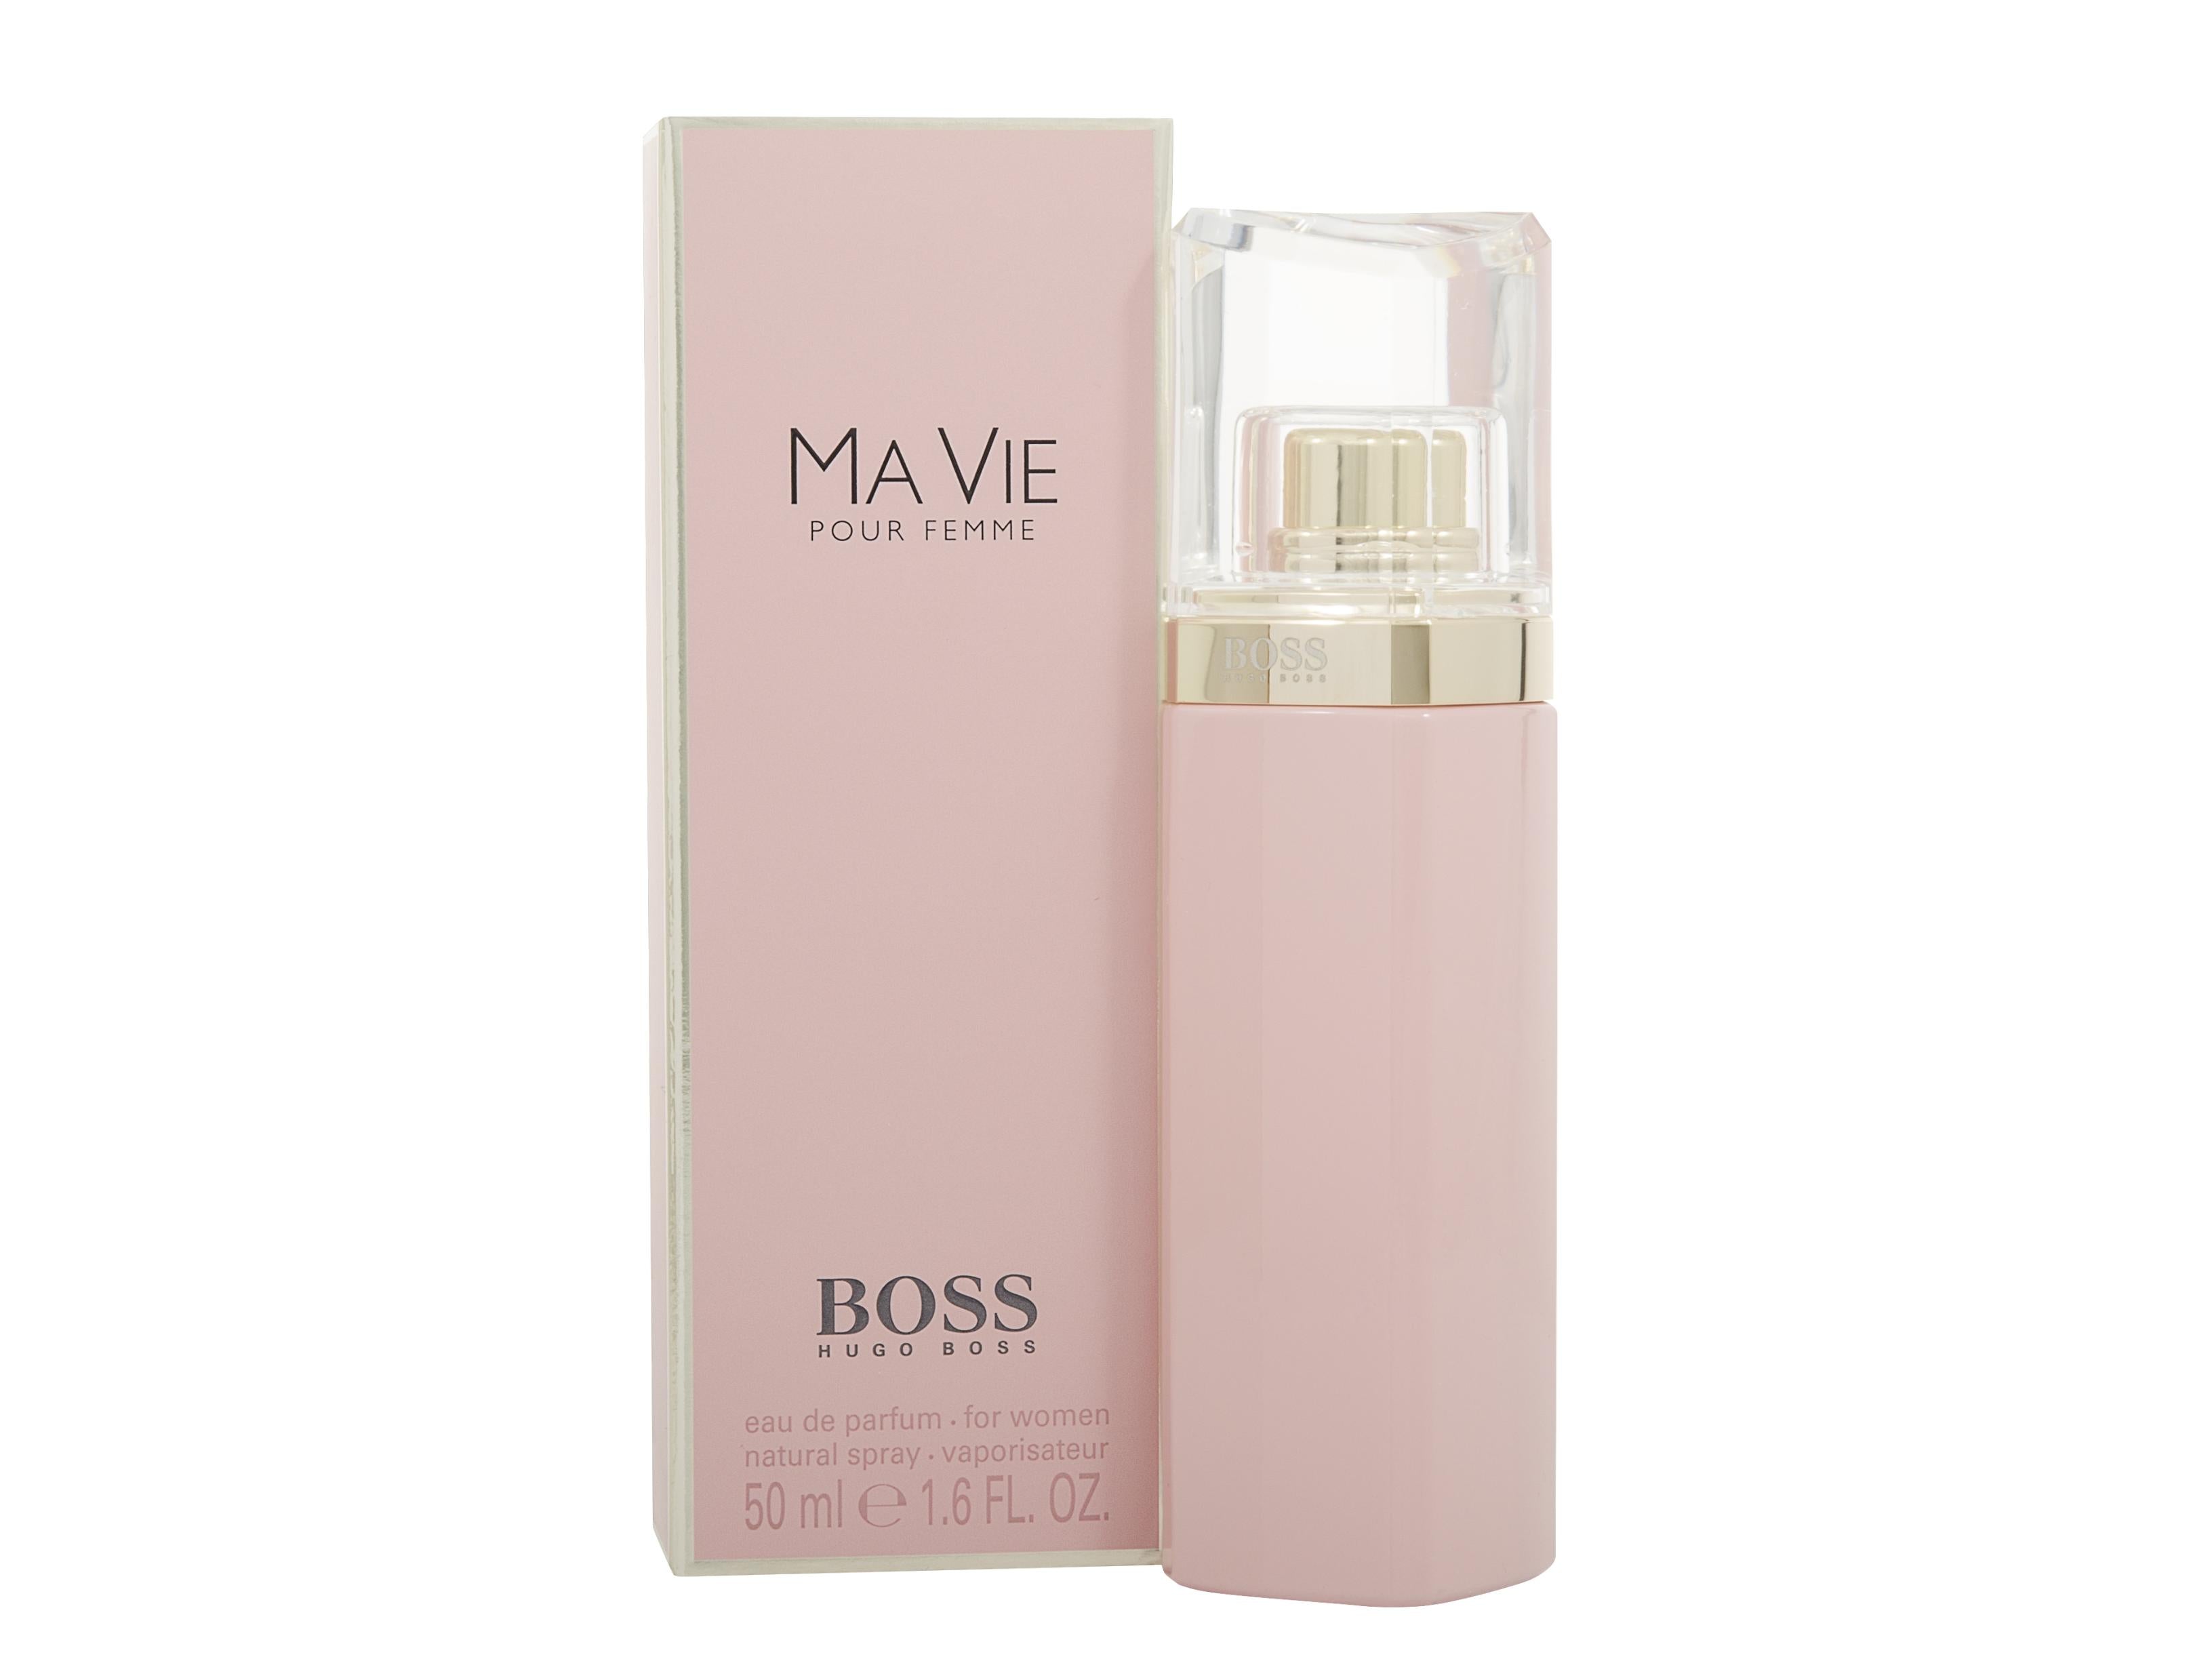 View Hugo Boss Boss Ma Vie Eau de Parfum 50ml Spray information